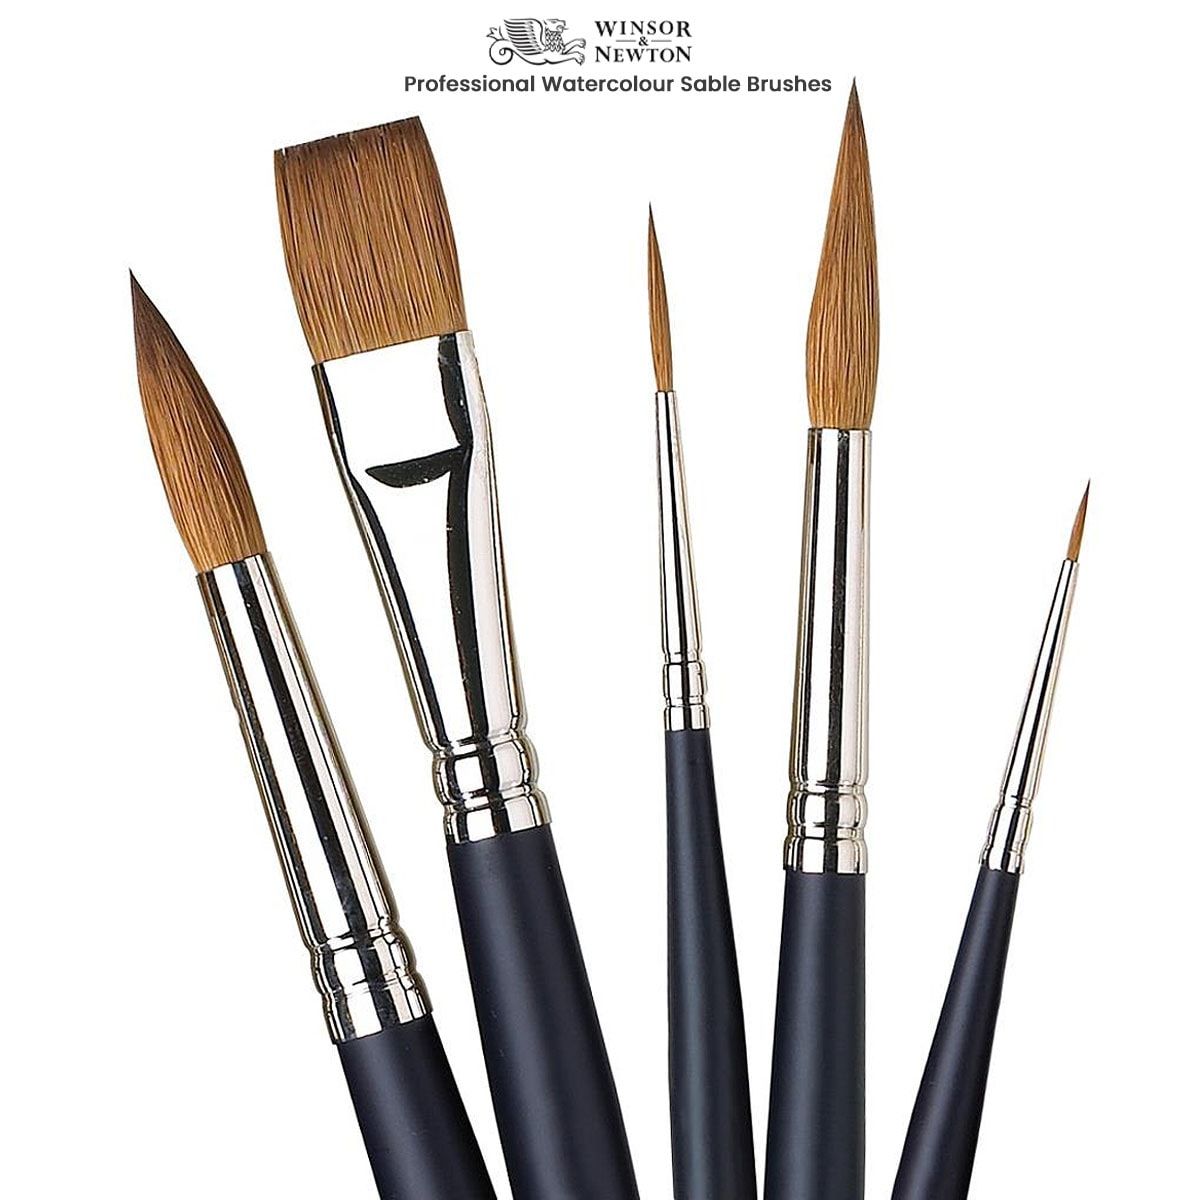 Winsor & Newton Professional Watercolour Sable Brushes | Jerry's Artarama